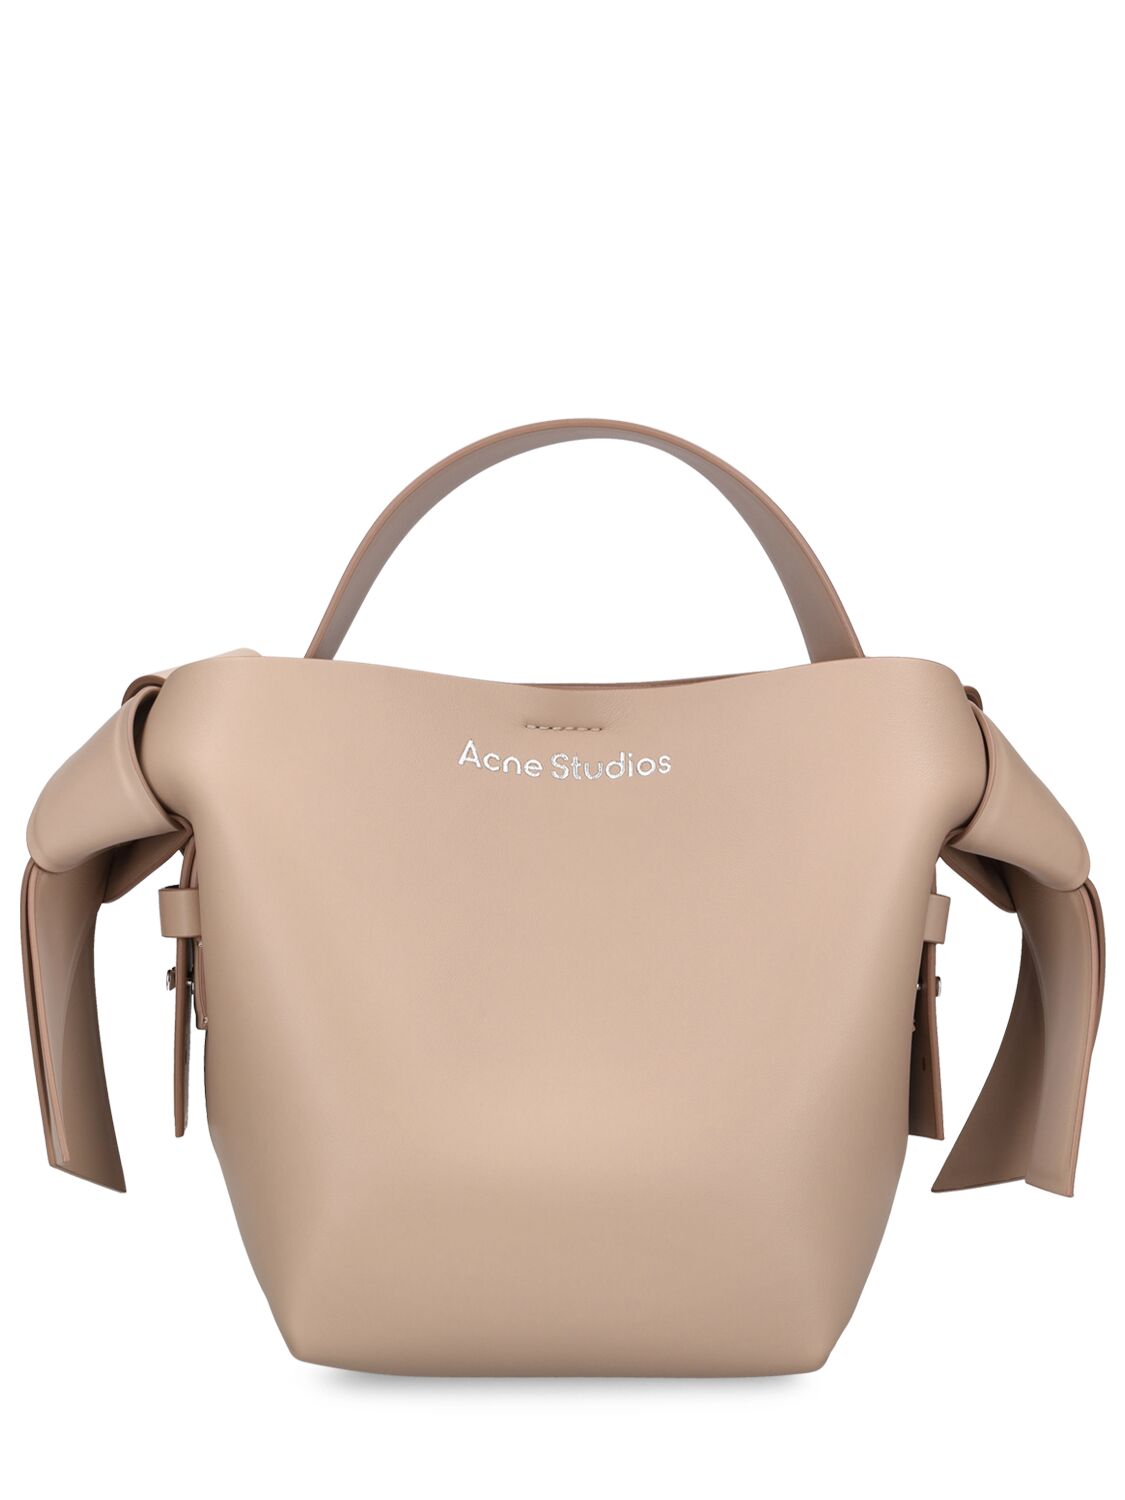 Acne Studios Mini Musubi Leather Top Handle Bag In Taupe Beige